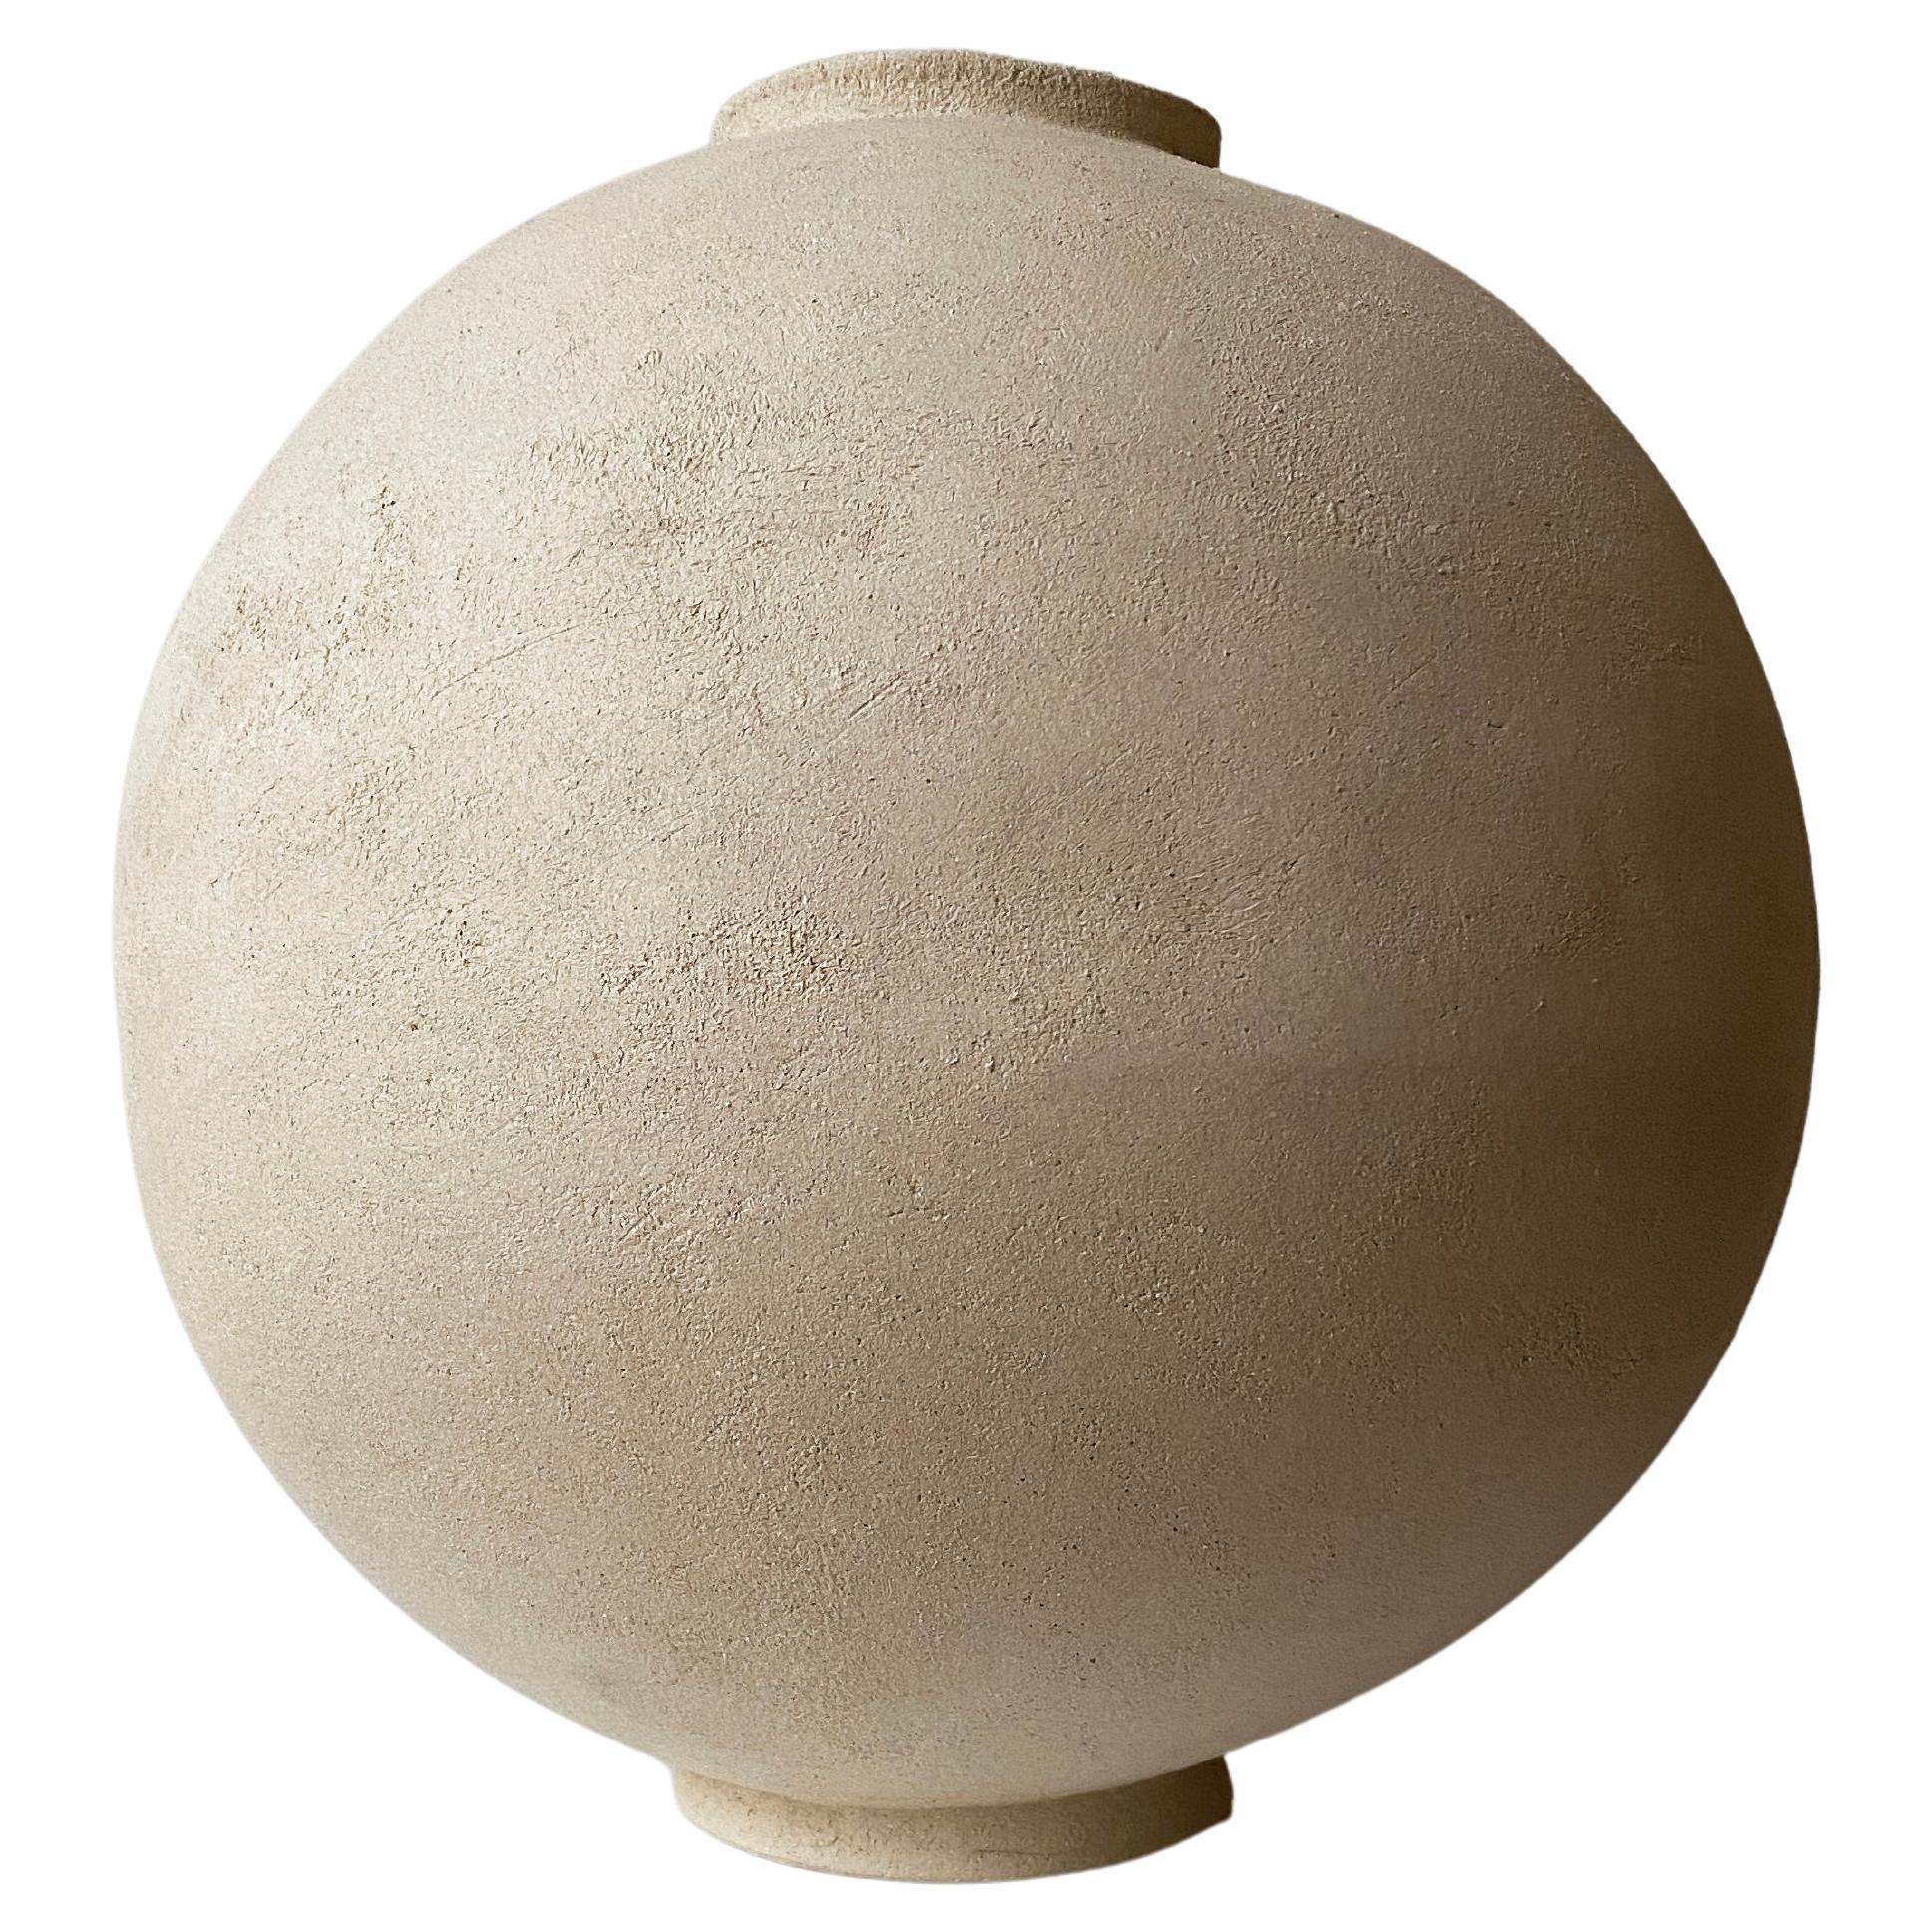 Sandstone Moon Jar by Laura Pasquino